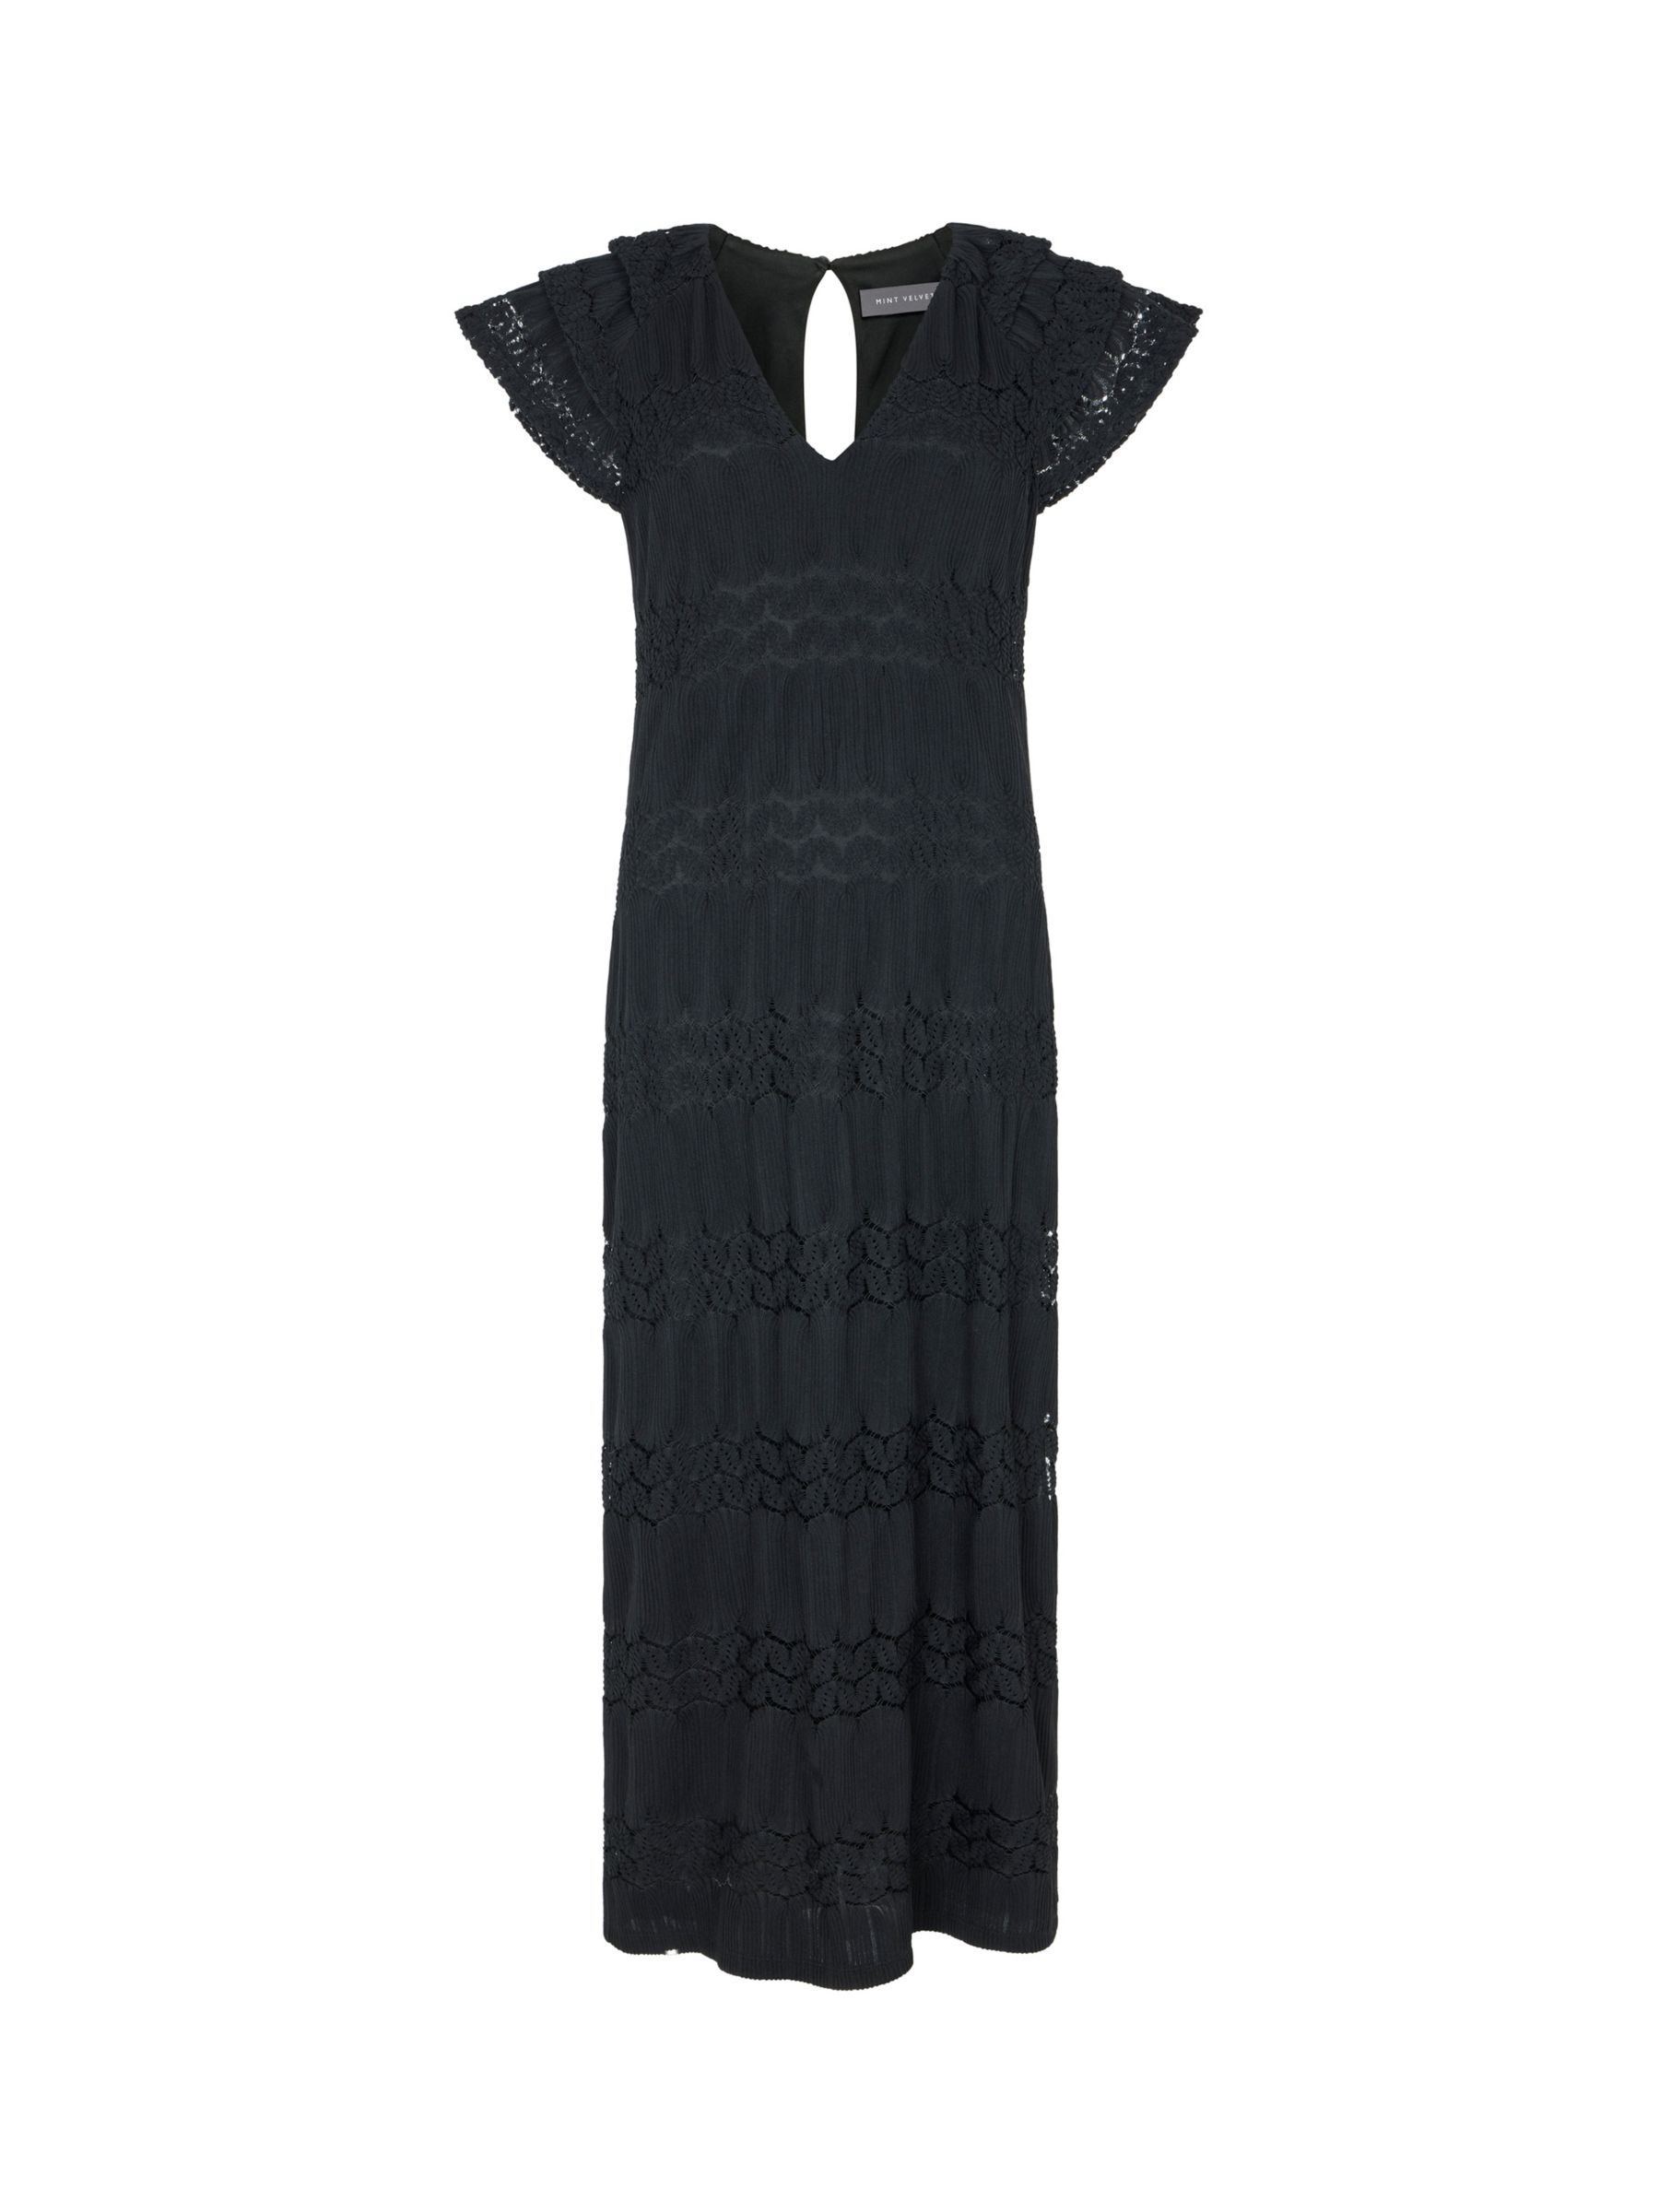 Mint Velvet Lace Crochet Ruffle Midi Dress, Black, M